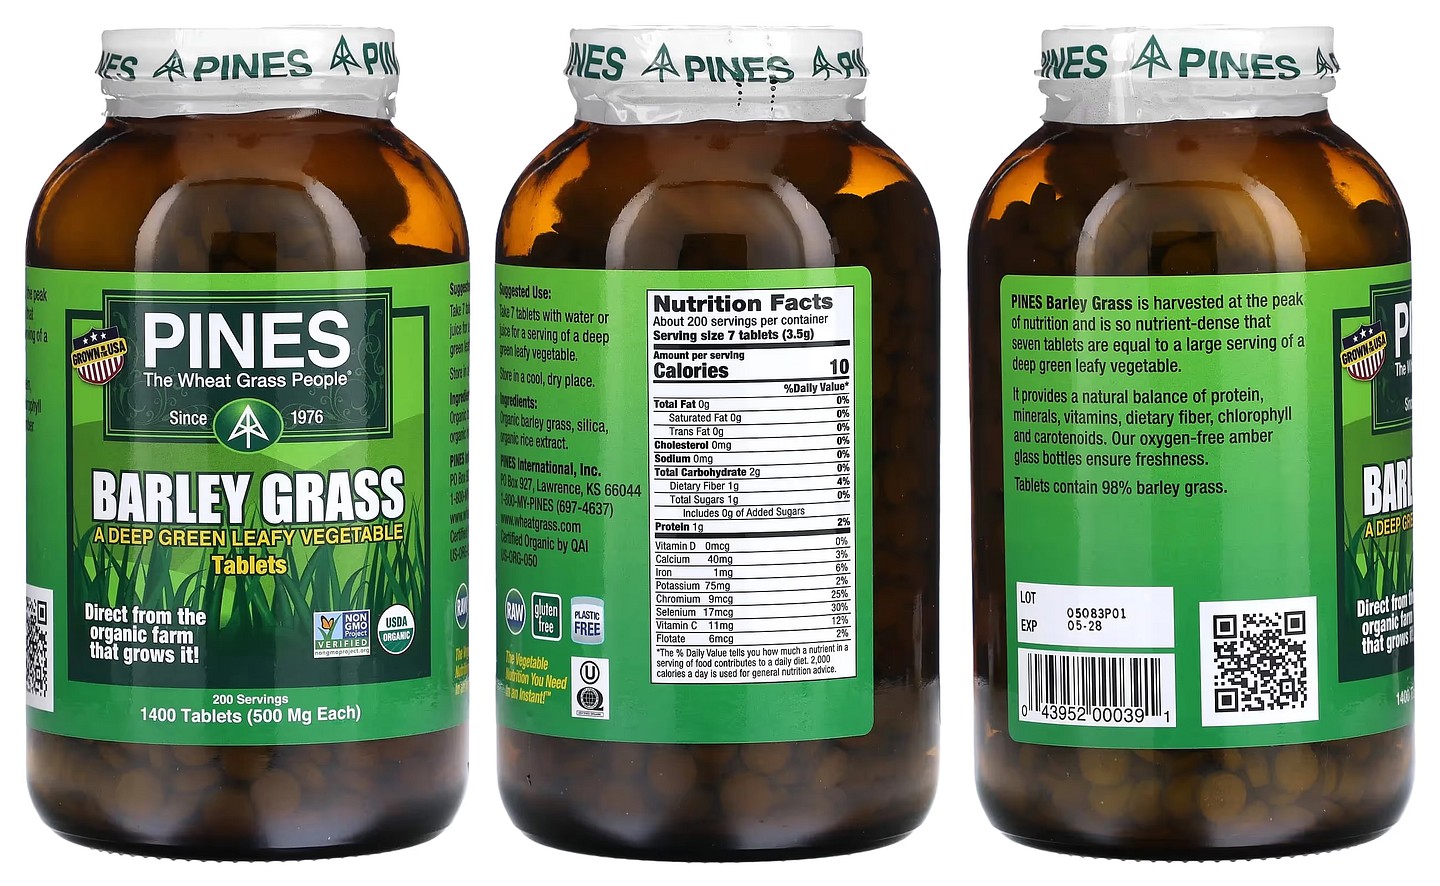 Pines International, Barley Grass packaging